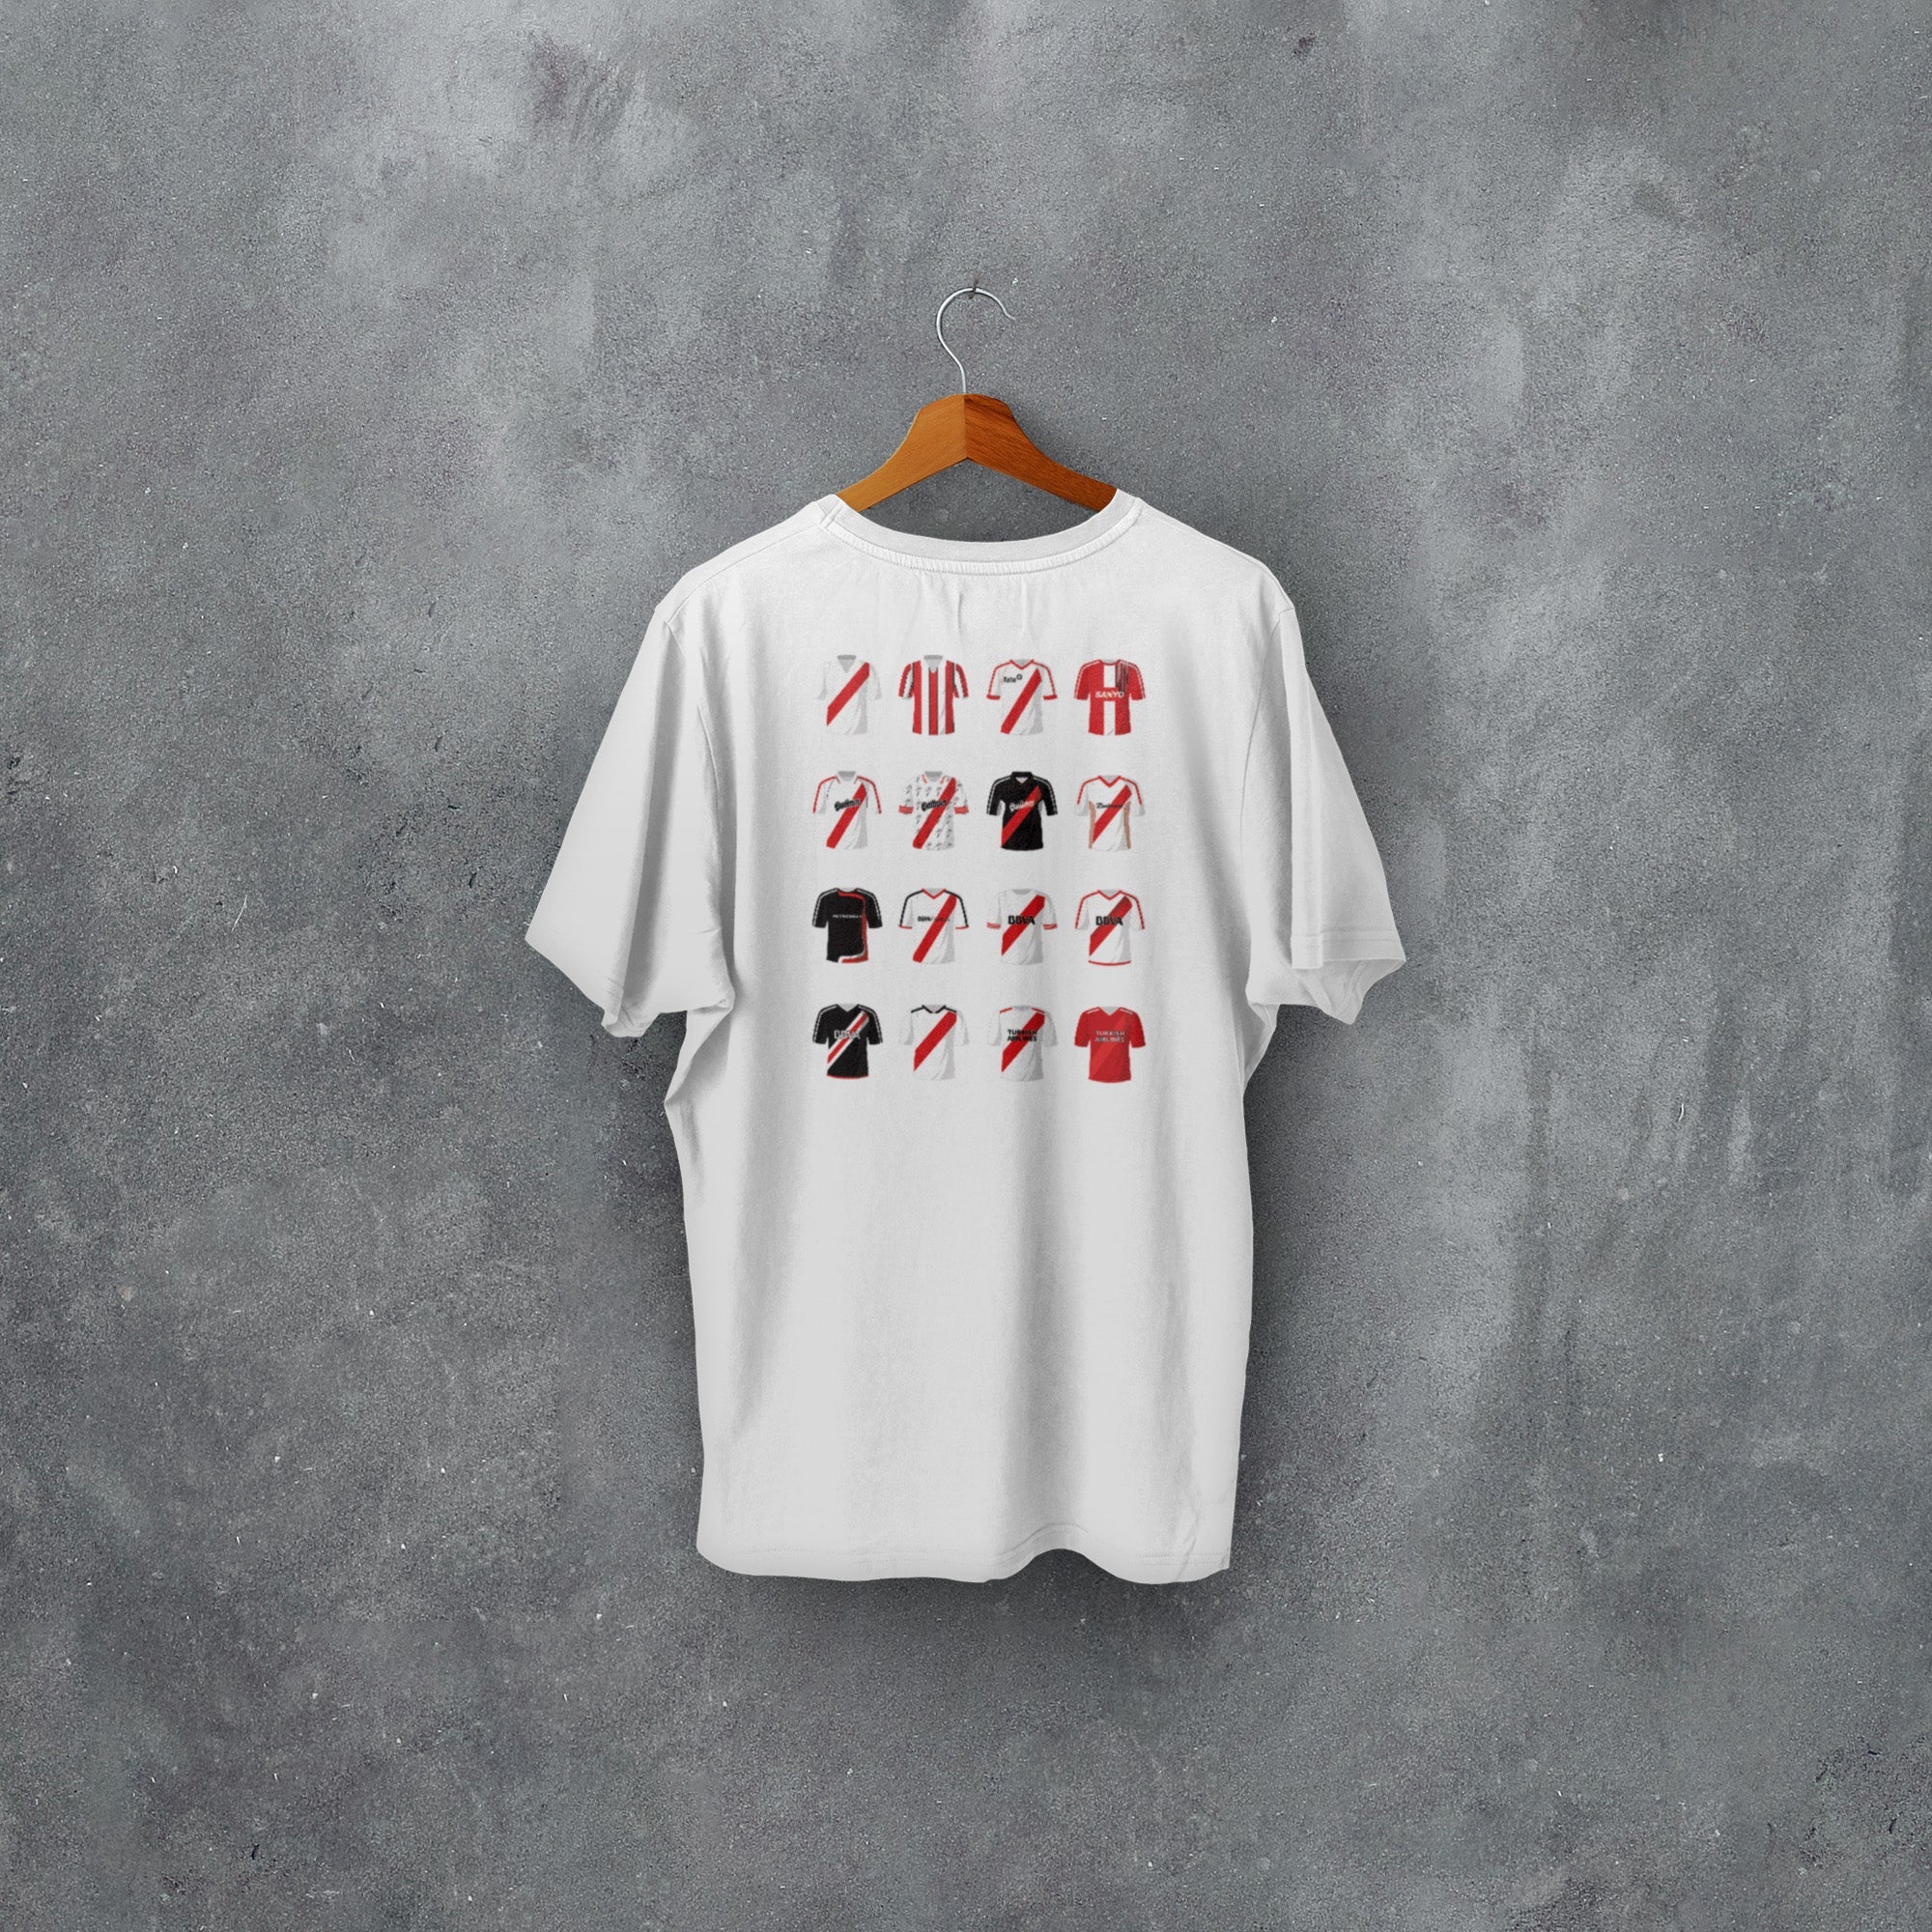 River Plate Classic Kits Football T-Shirt